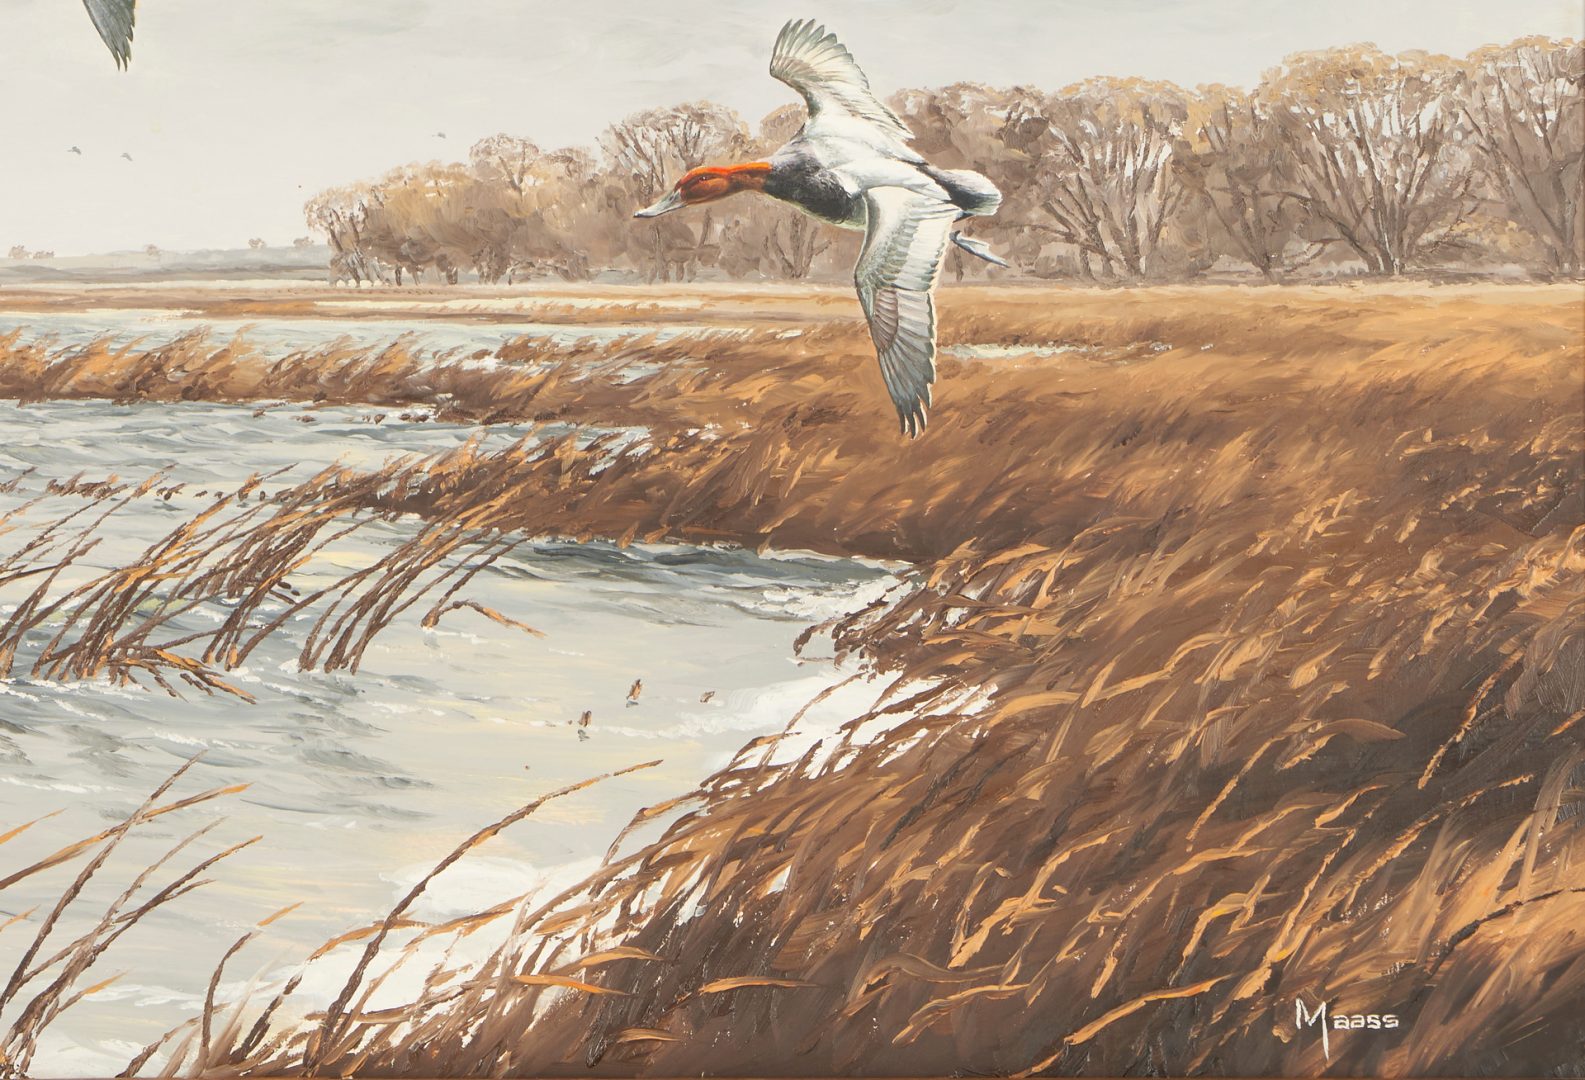 Lot 603: David Maass O/B Painting, Ducks in Flight